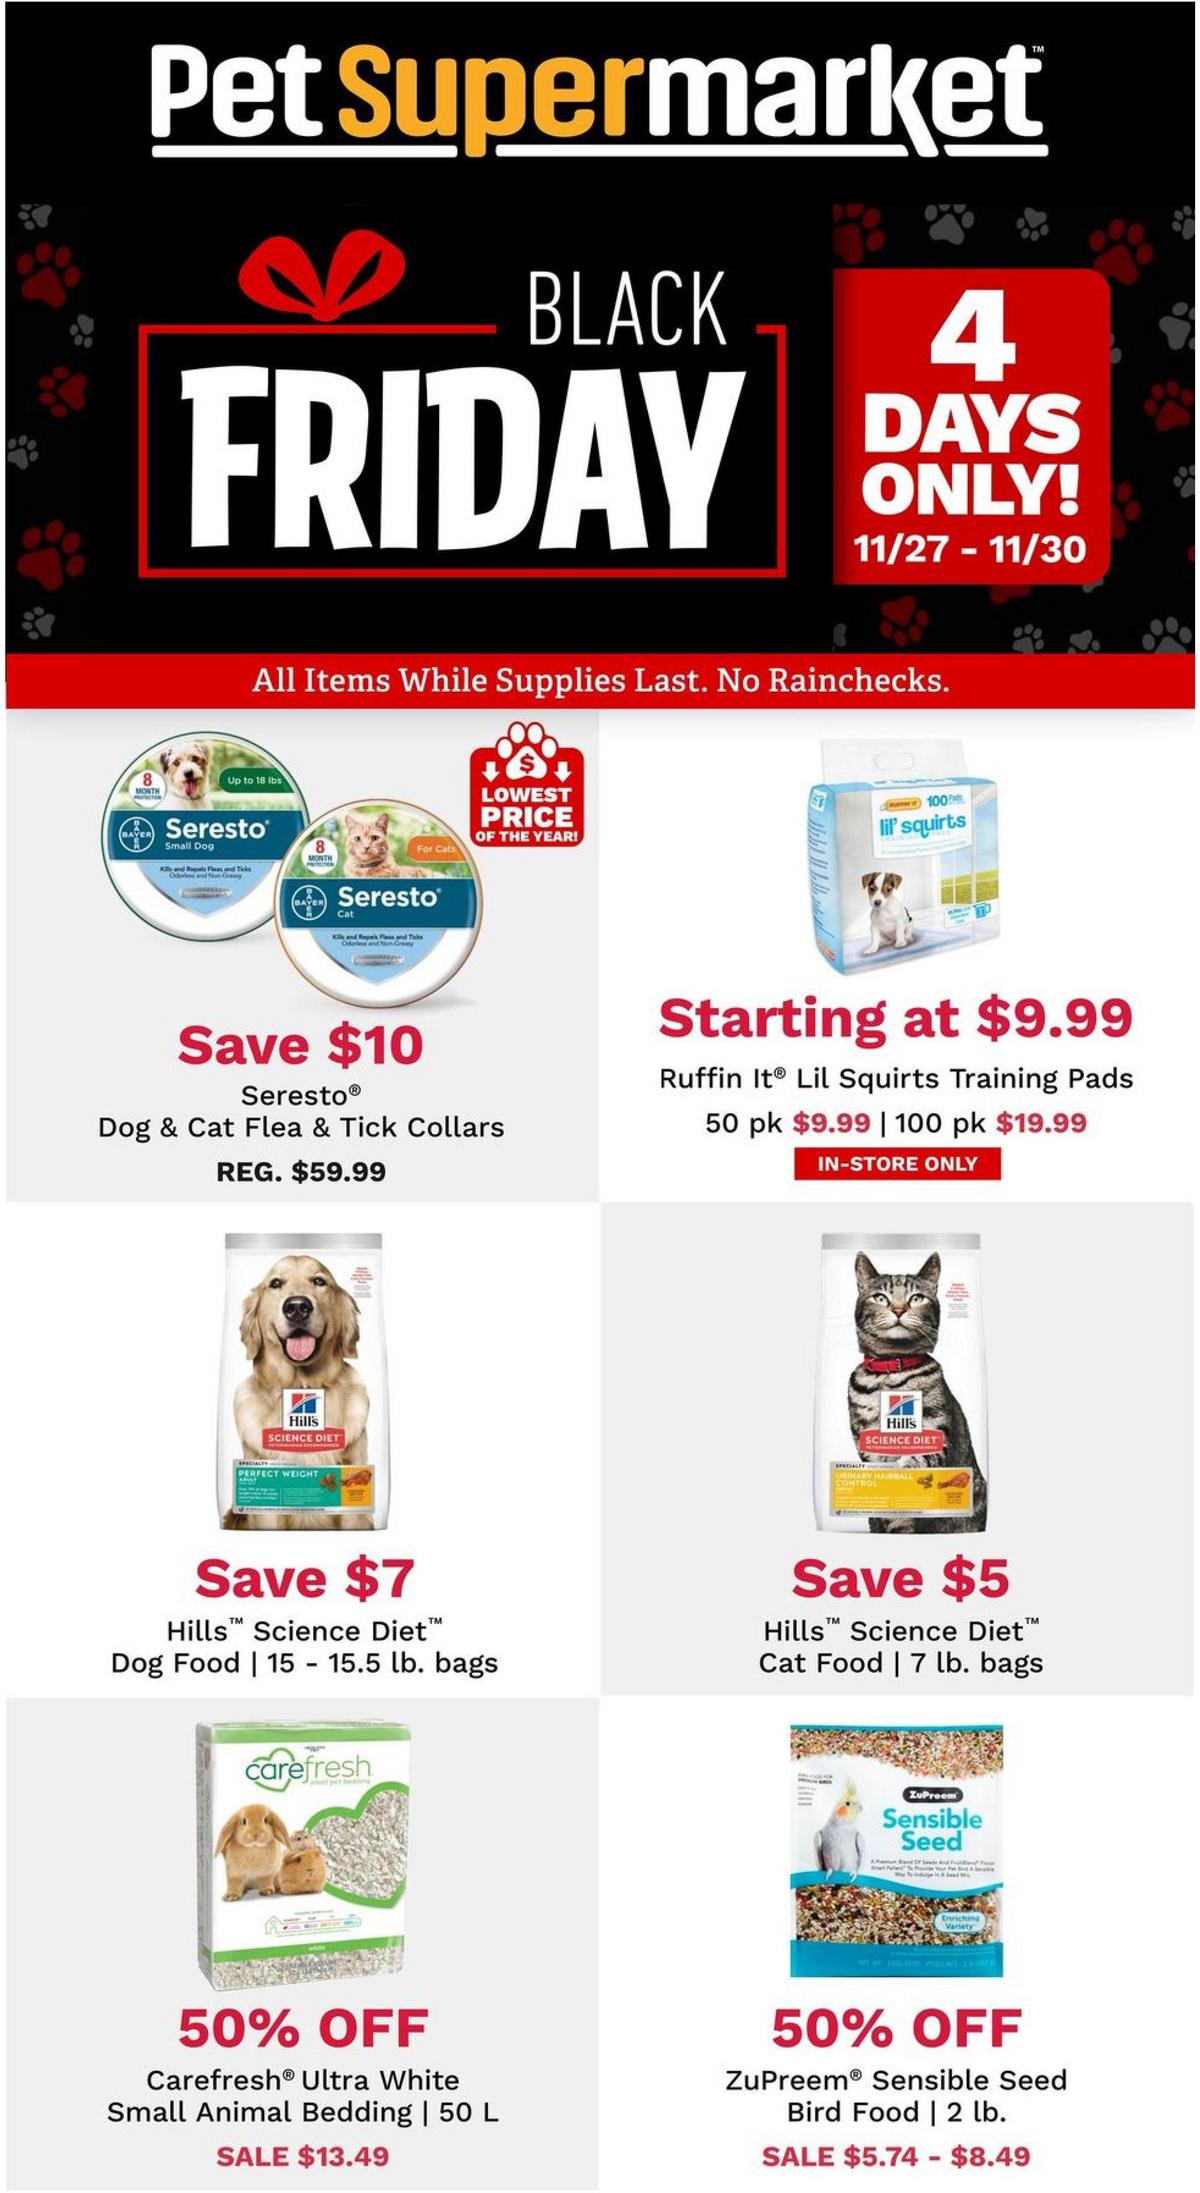 Pet Supermarket Black Friday Weekly Ad from November 27